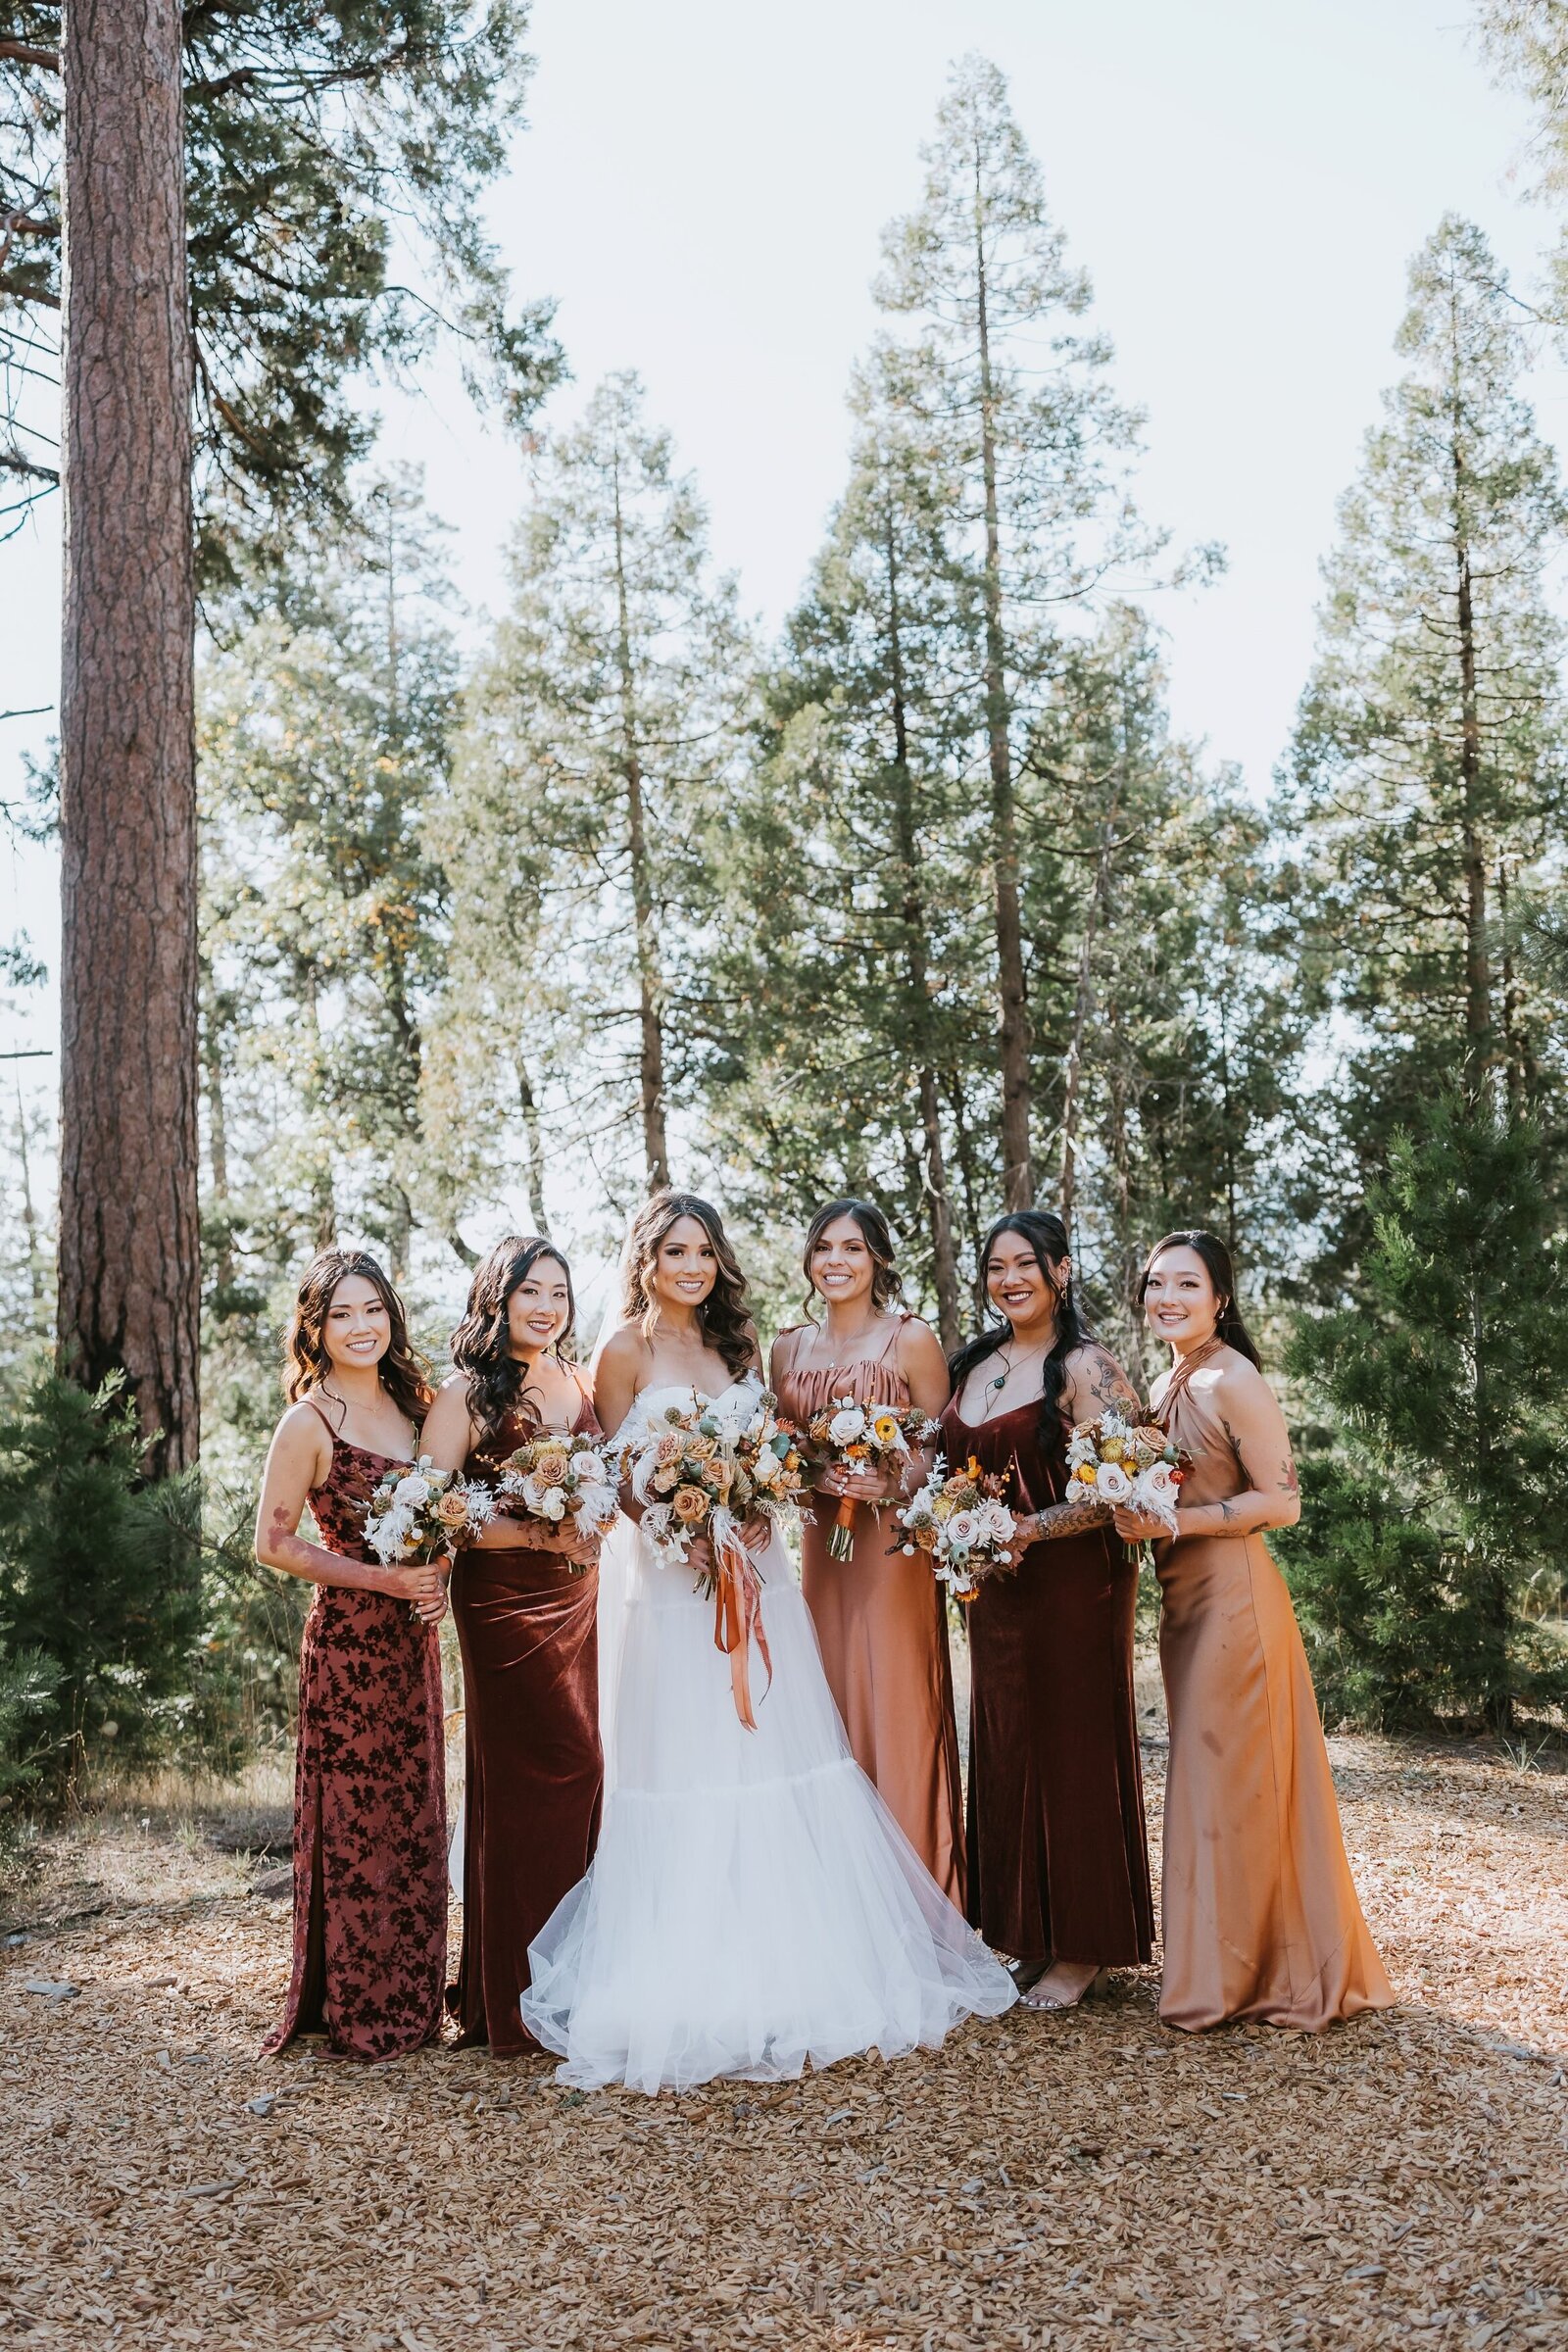 Yosemite wedding venue rush creek lodge